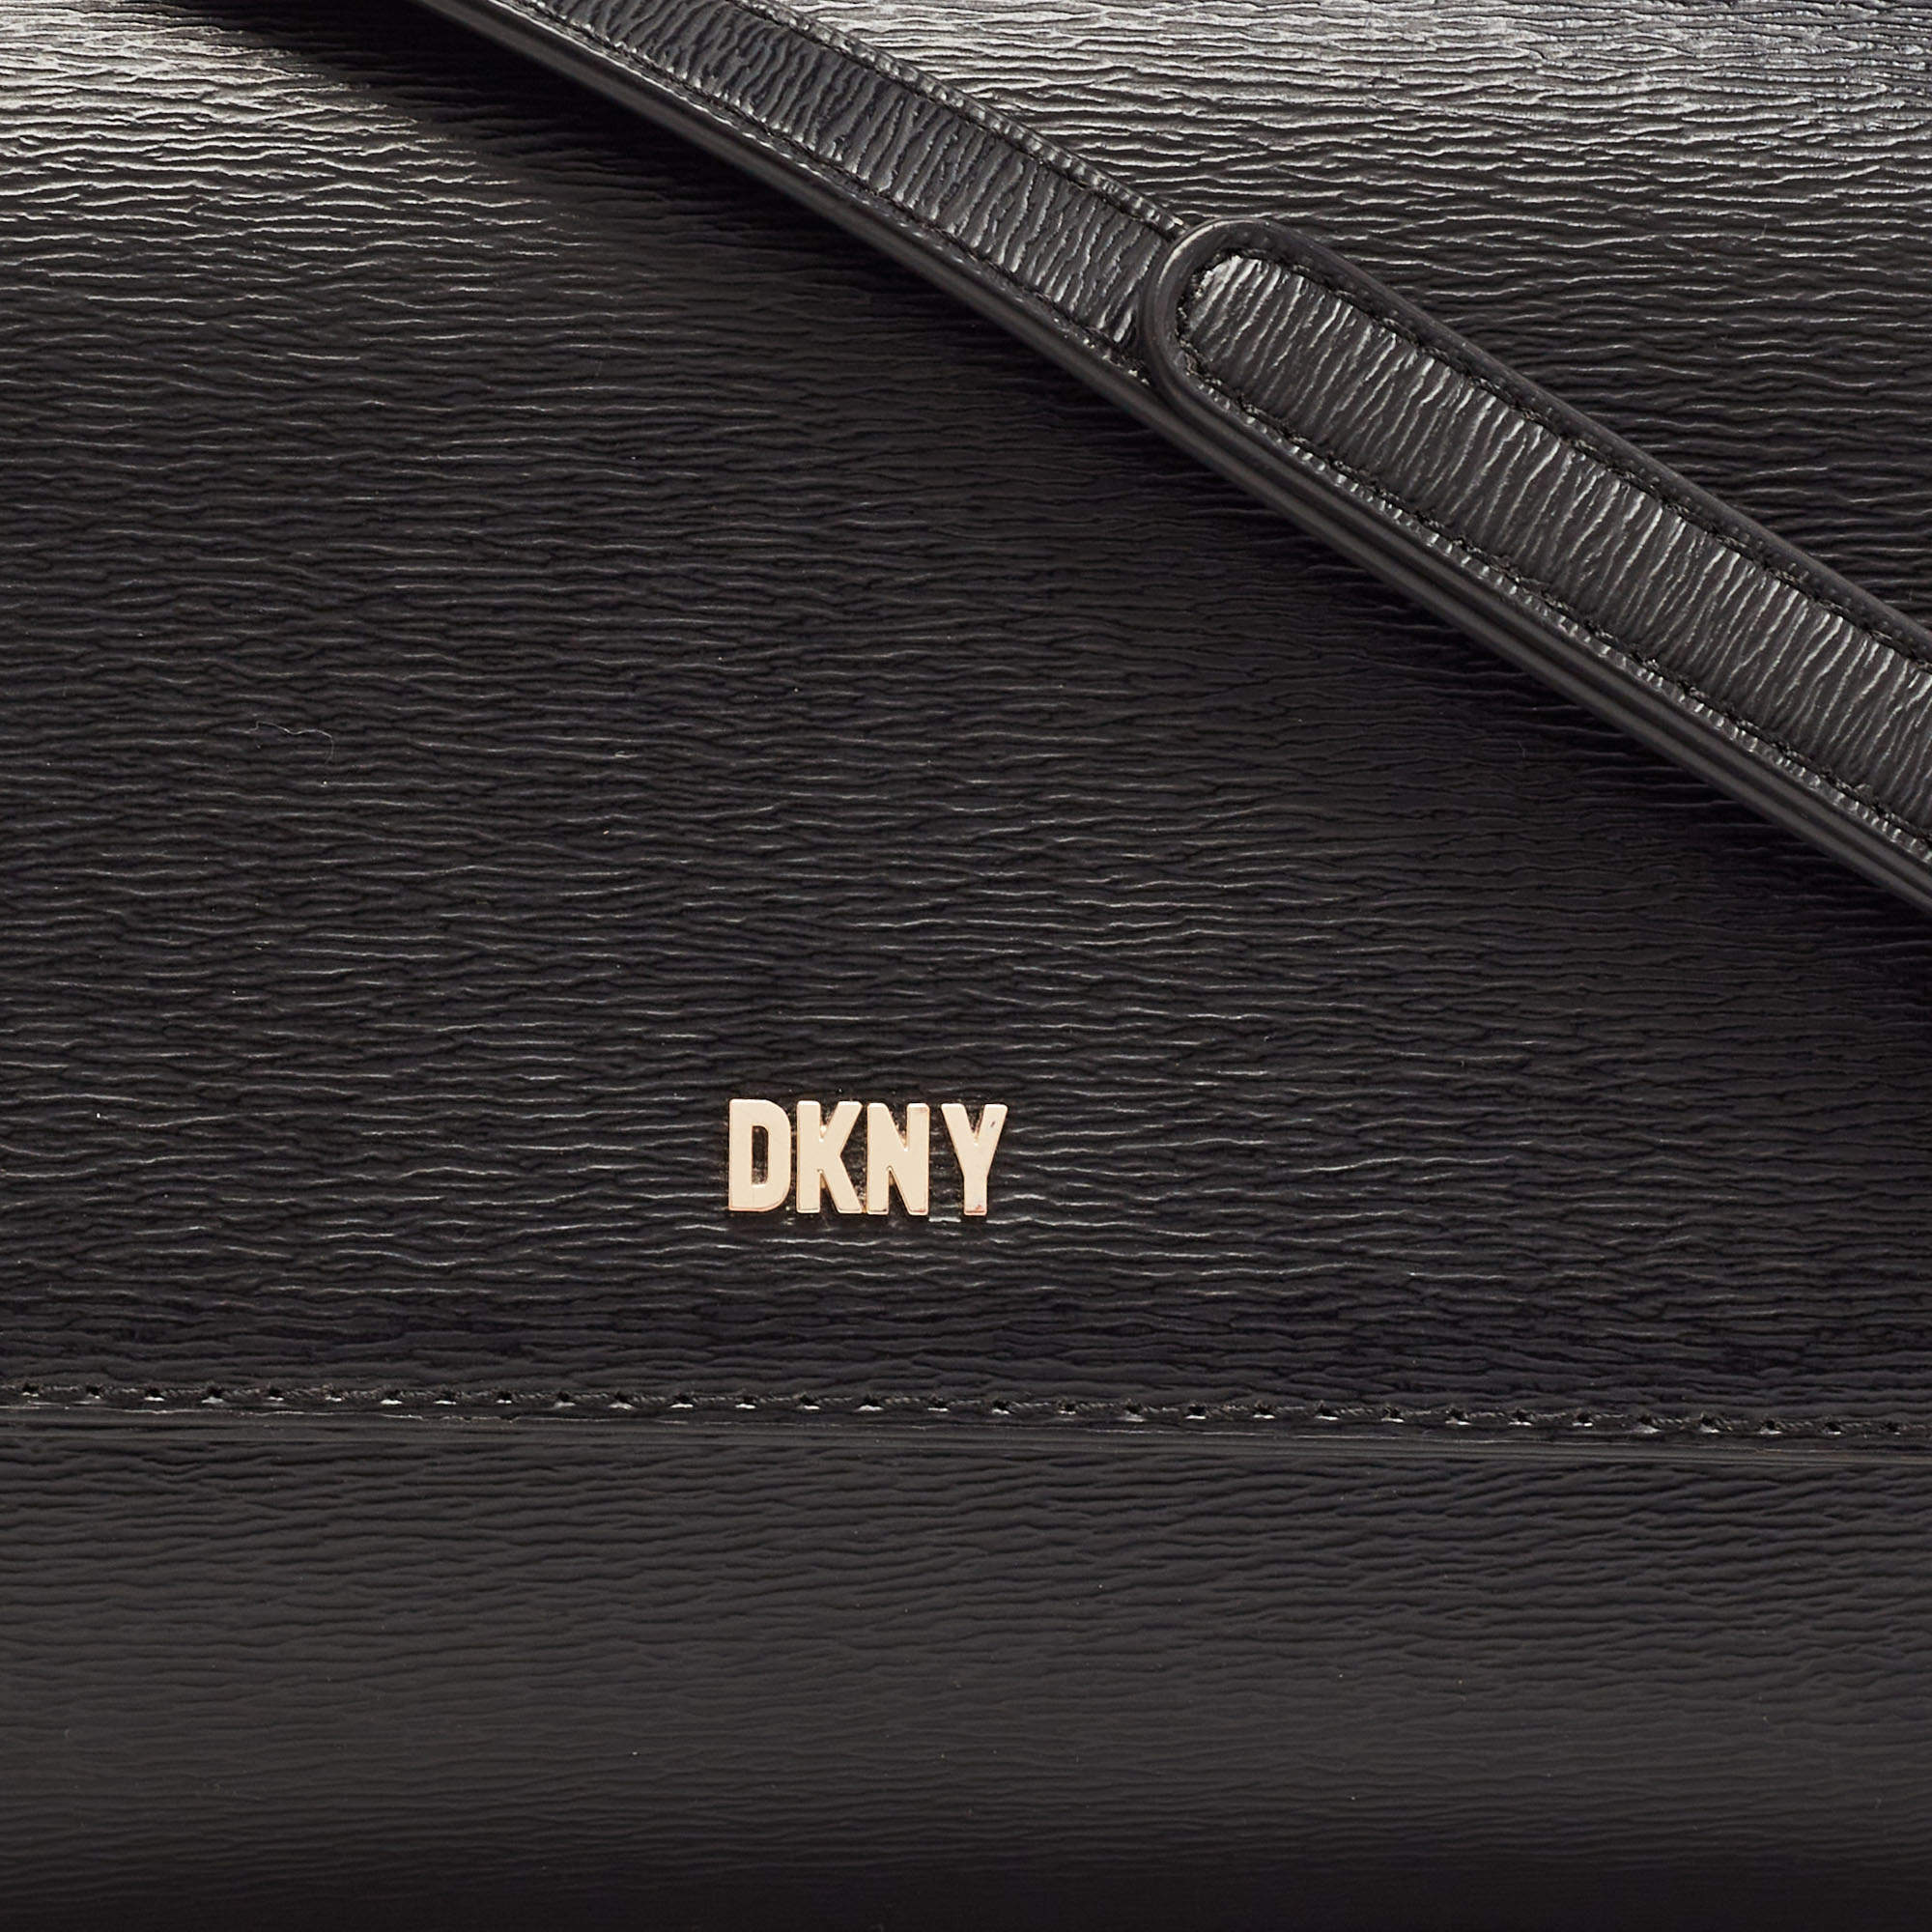 DKNY Bryant Medium Leather Flap Crossbody (BLACK), (RED), (WHITE